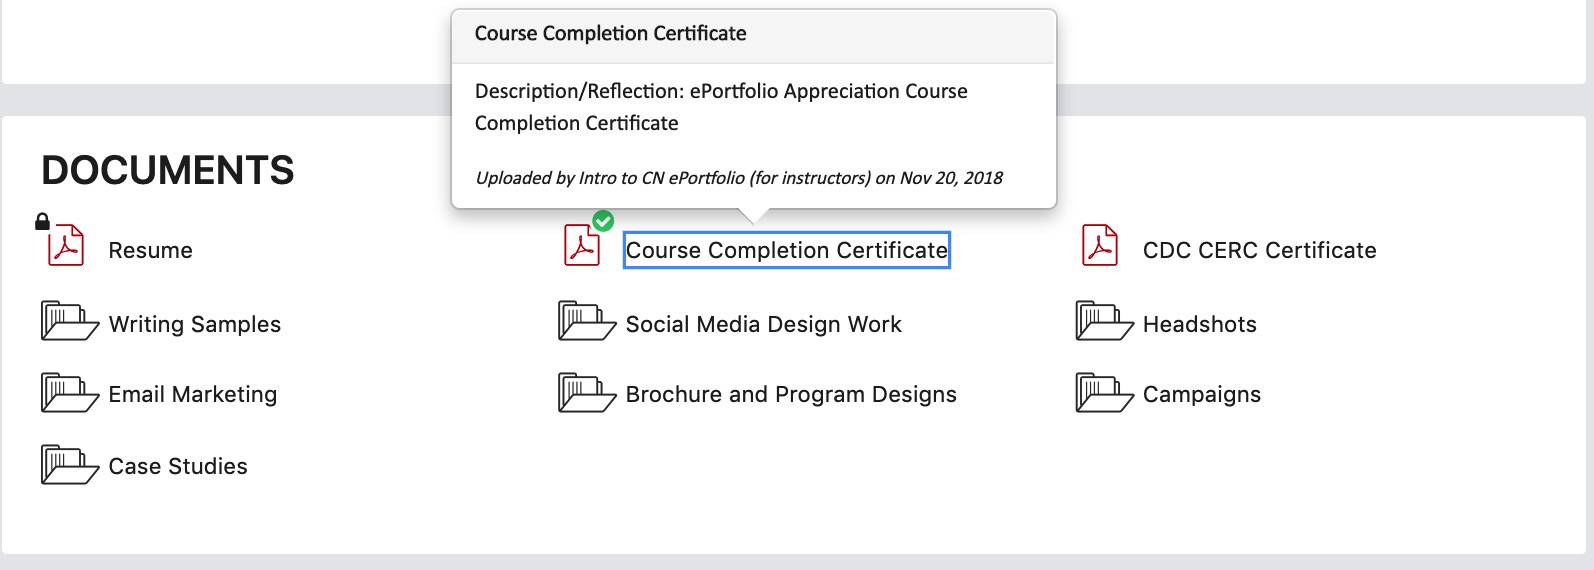 course_completion_certificate_on_ePortfolio.jpg